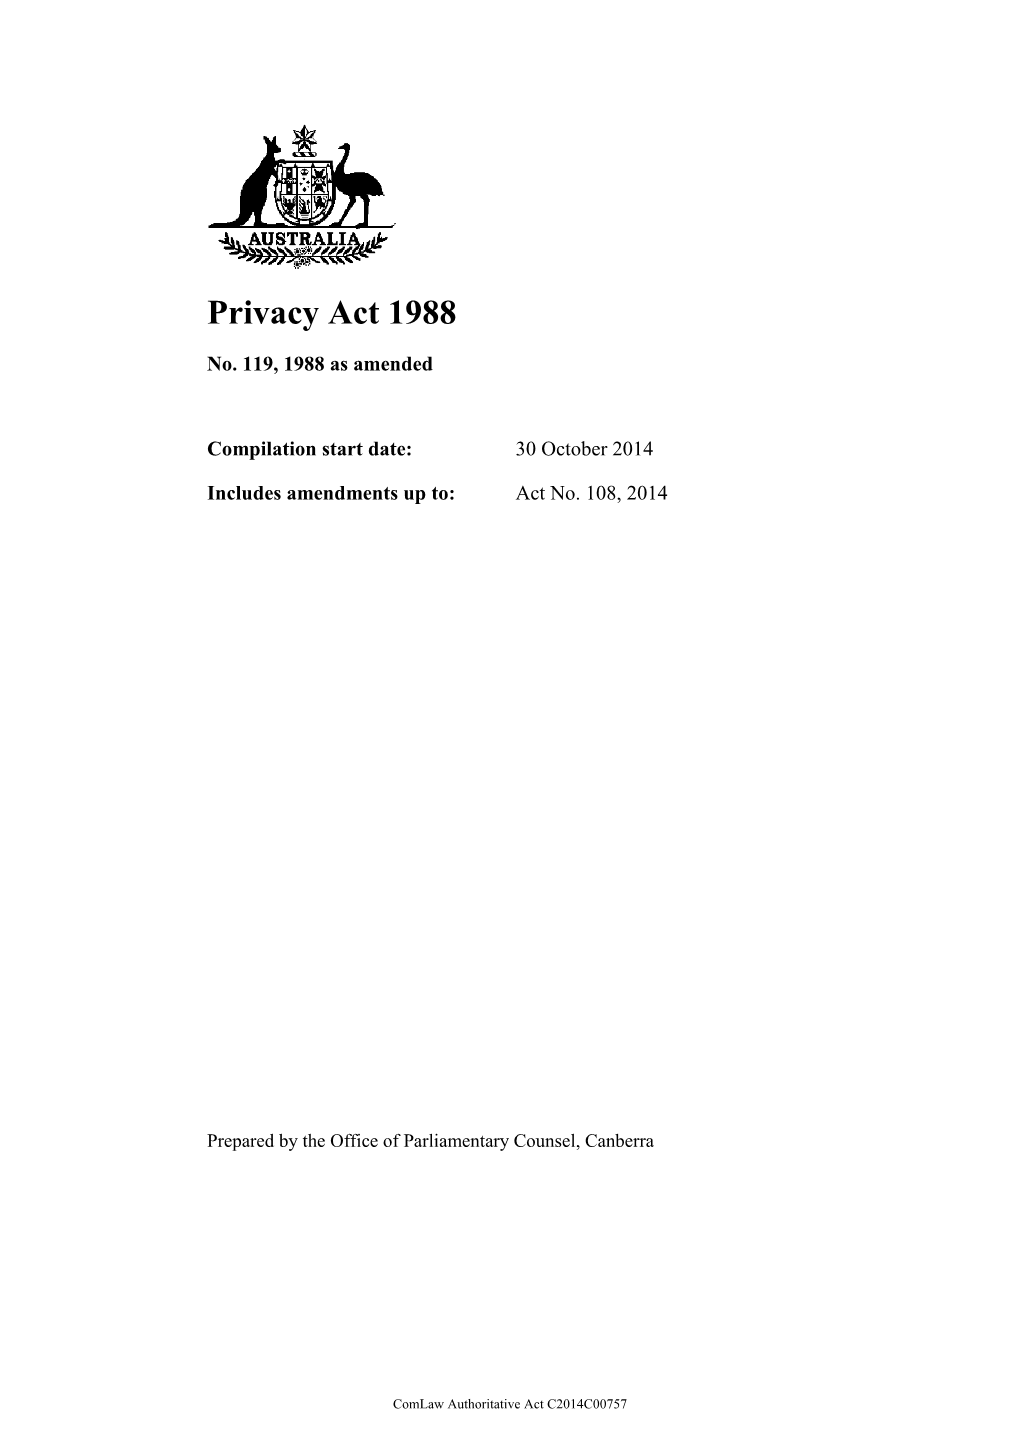 Australian Privacy Act 1988